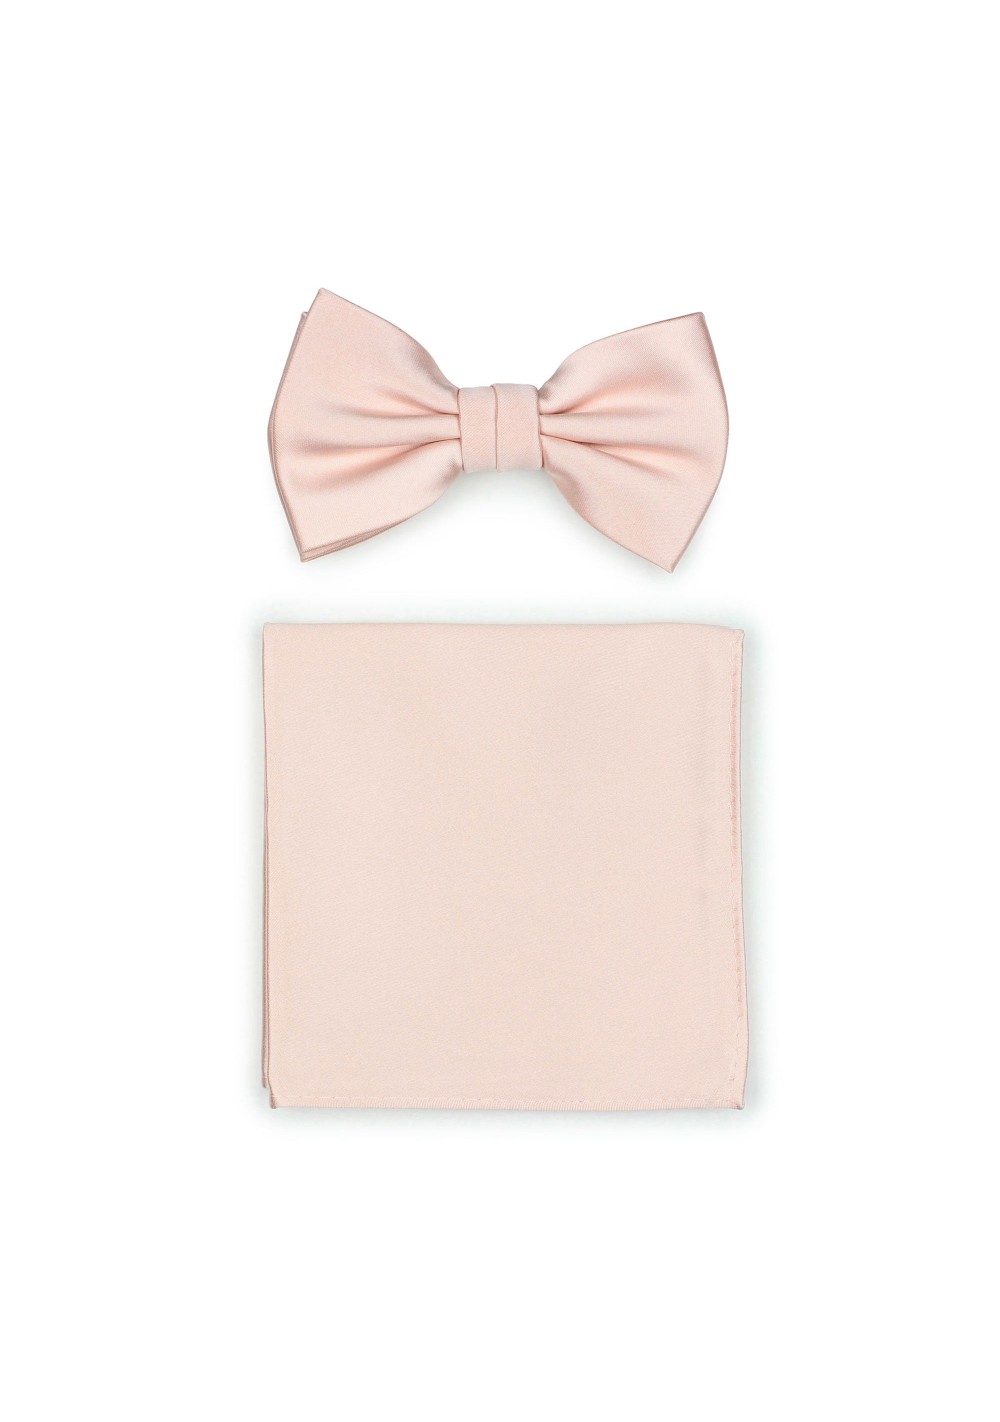 Light Peach Pocket Square Satin Finish Wedding Party packet Hanky Handkerchief 